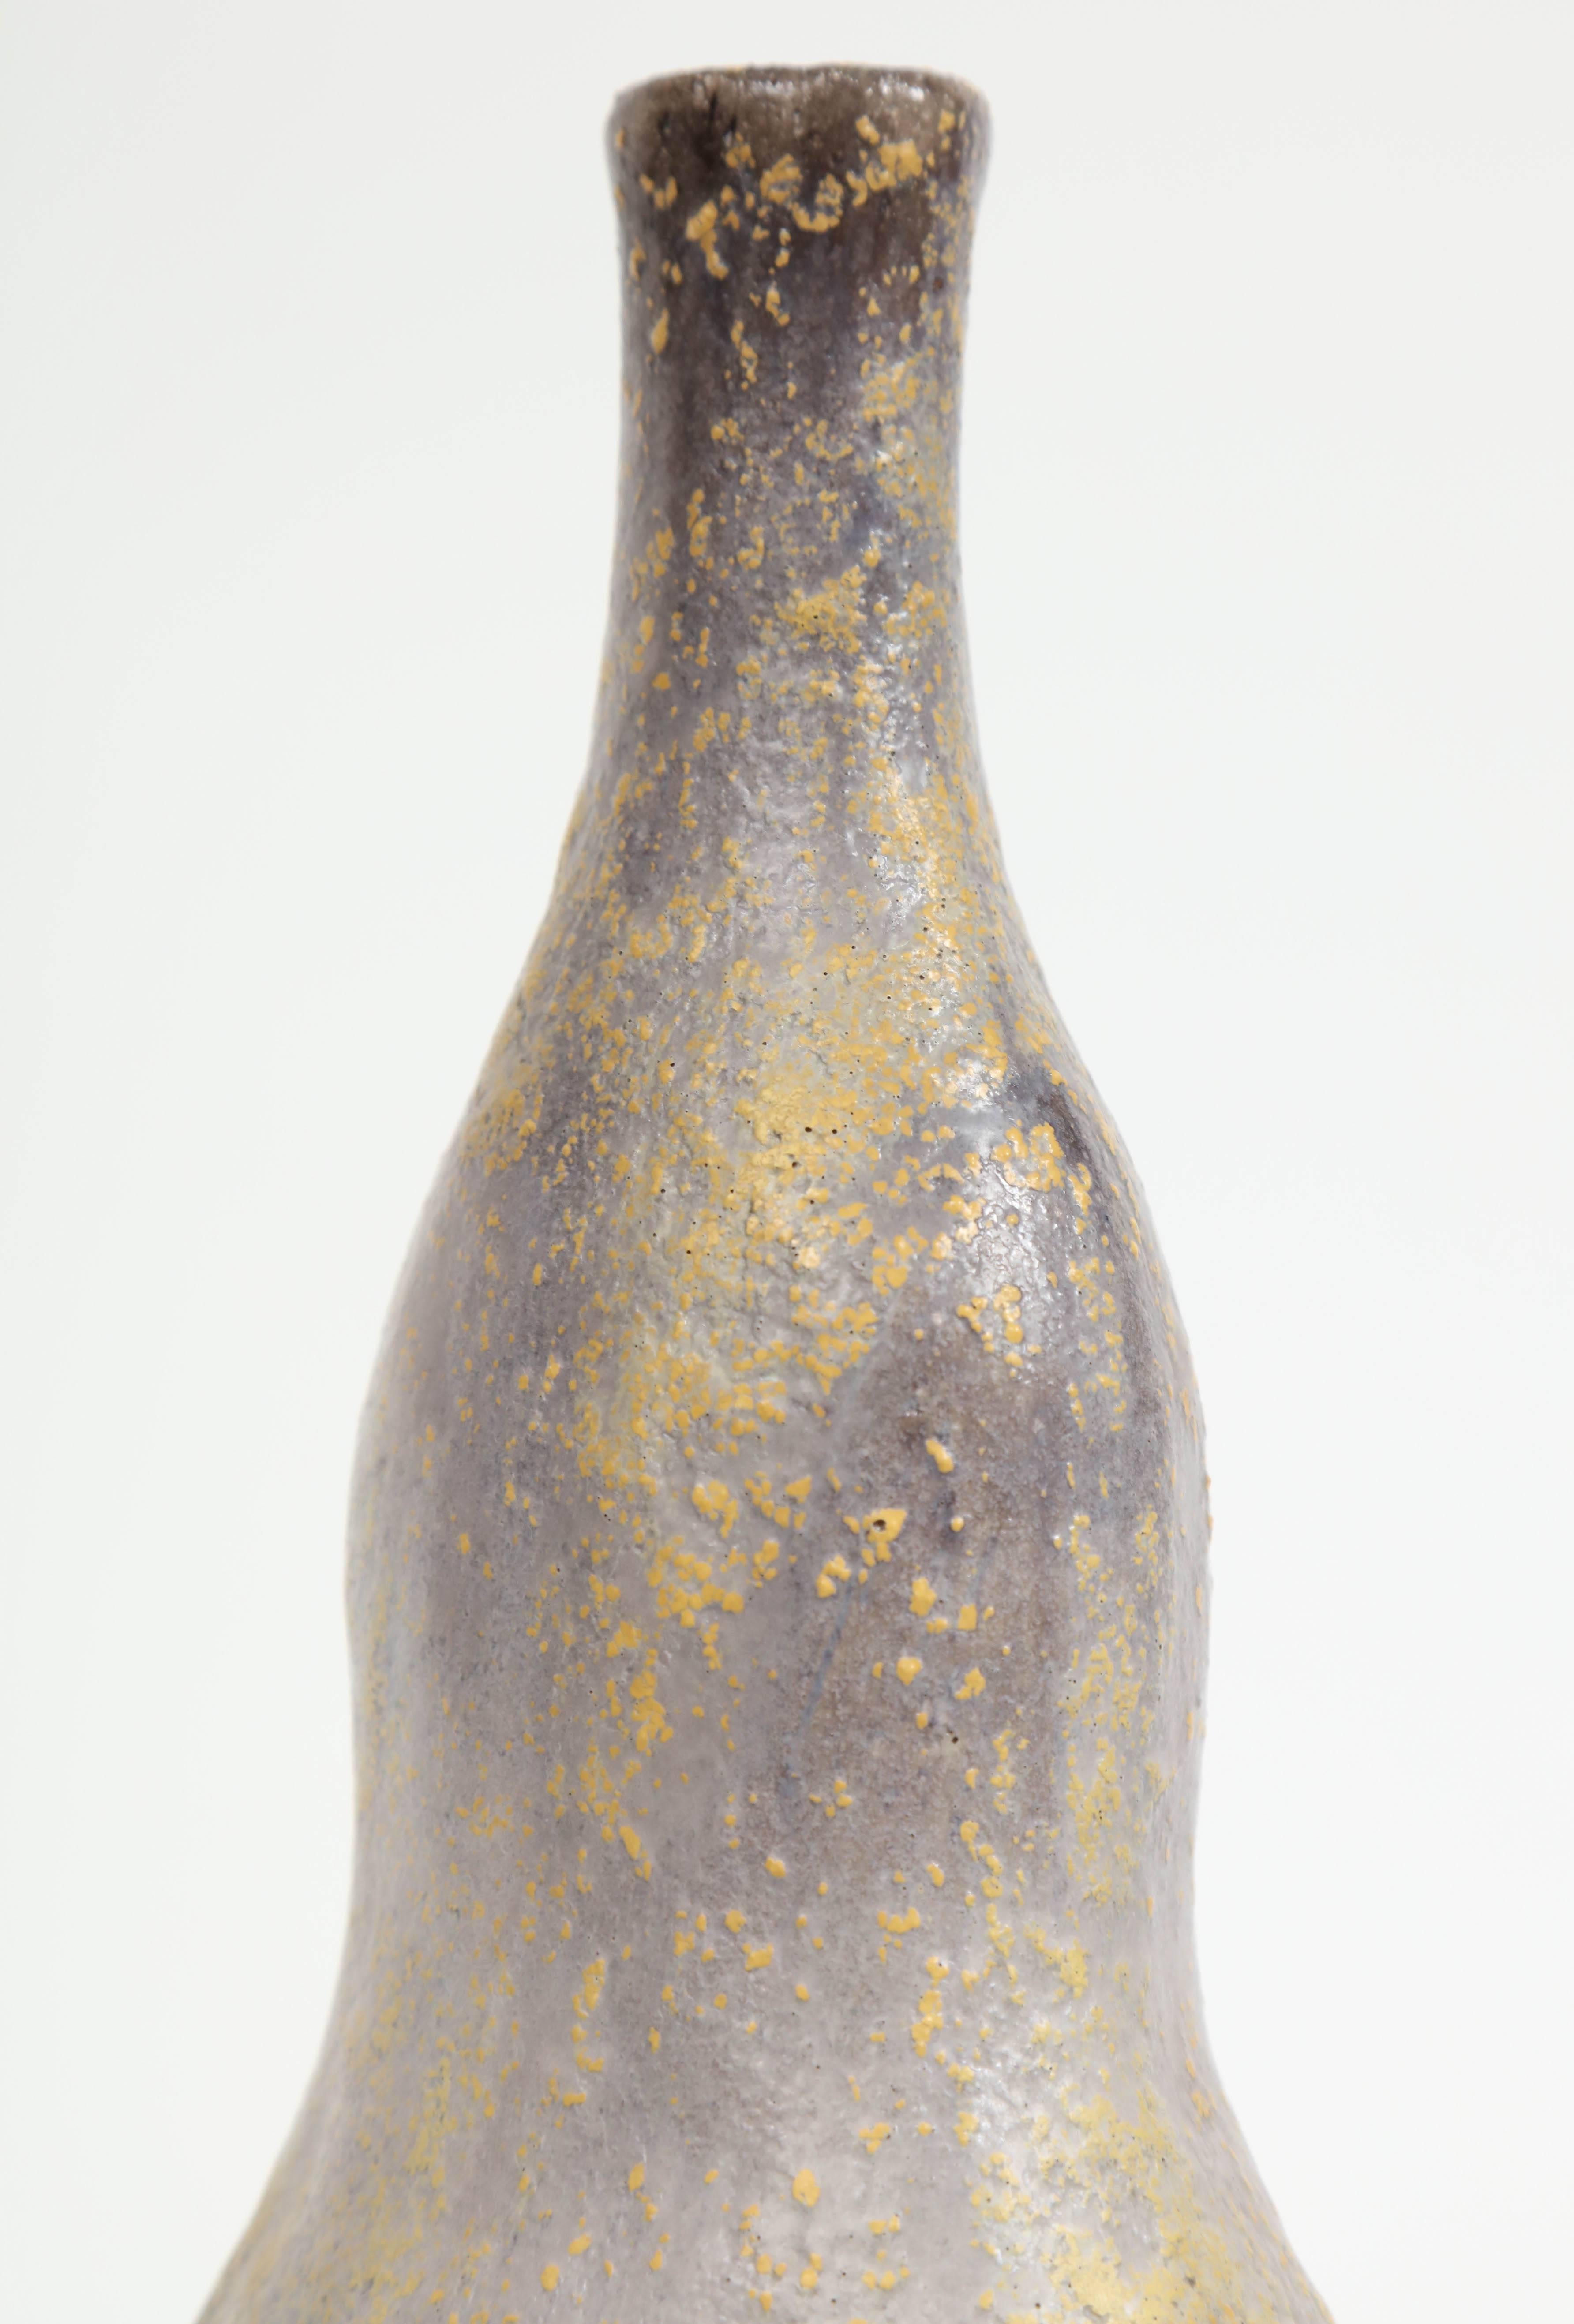 Marcello Fantoni Ceramic Bottle Vase, Glazed Stoneware, circa 1970s For Sale 1